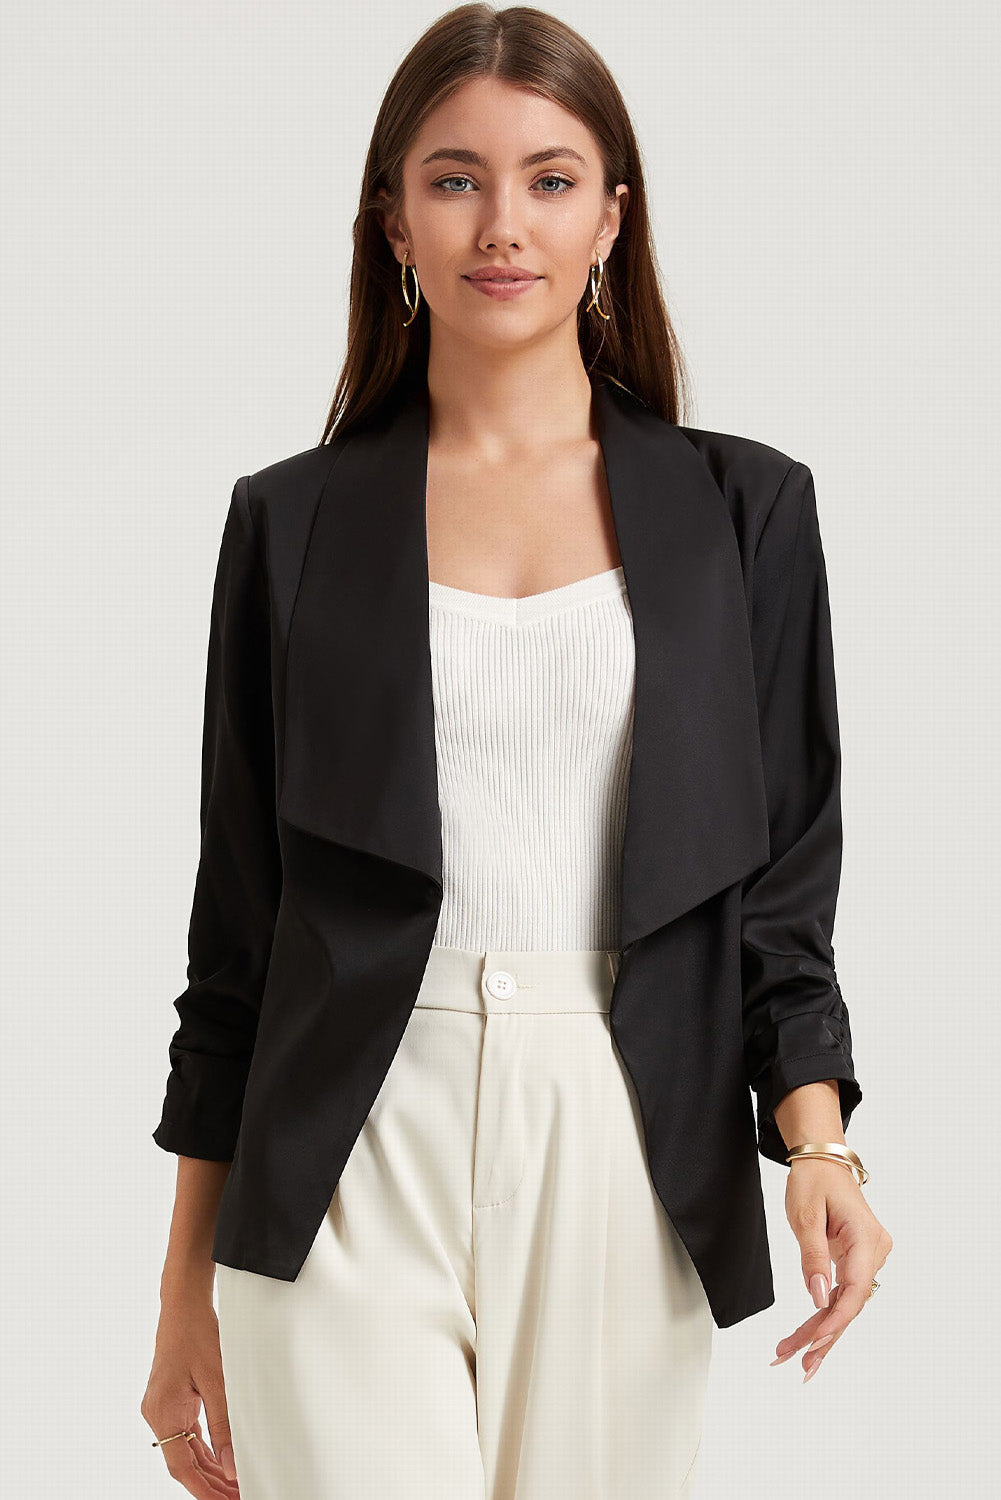 The802Gypsy  coats and jackets Black / S / 90%Polyester+10%Elastane TRAVELING GYPSY-Office Styled Satin Blazer